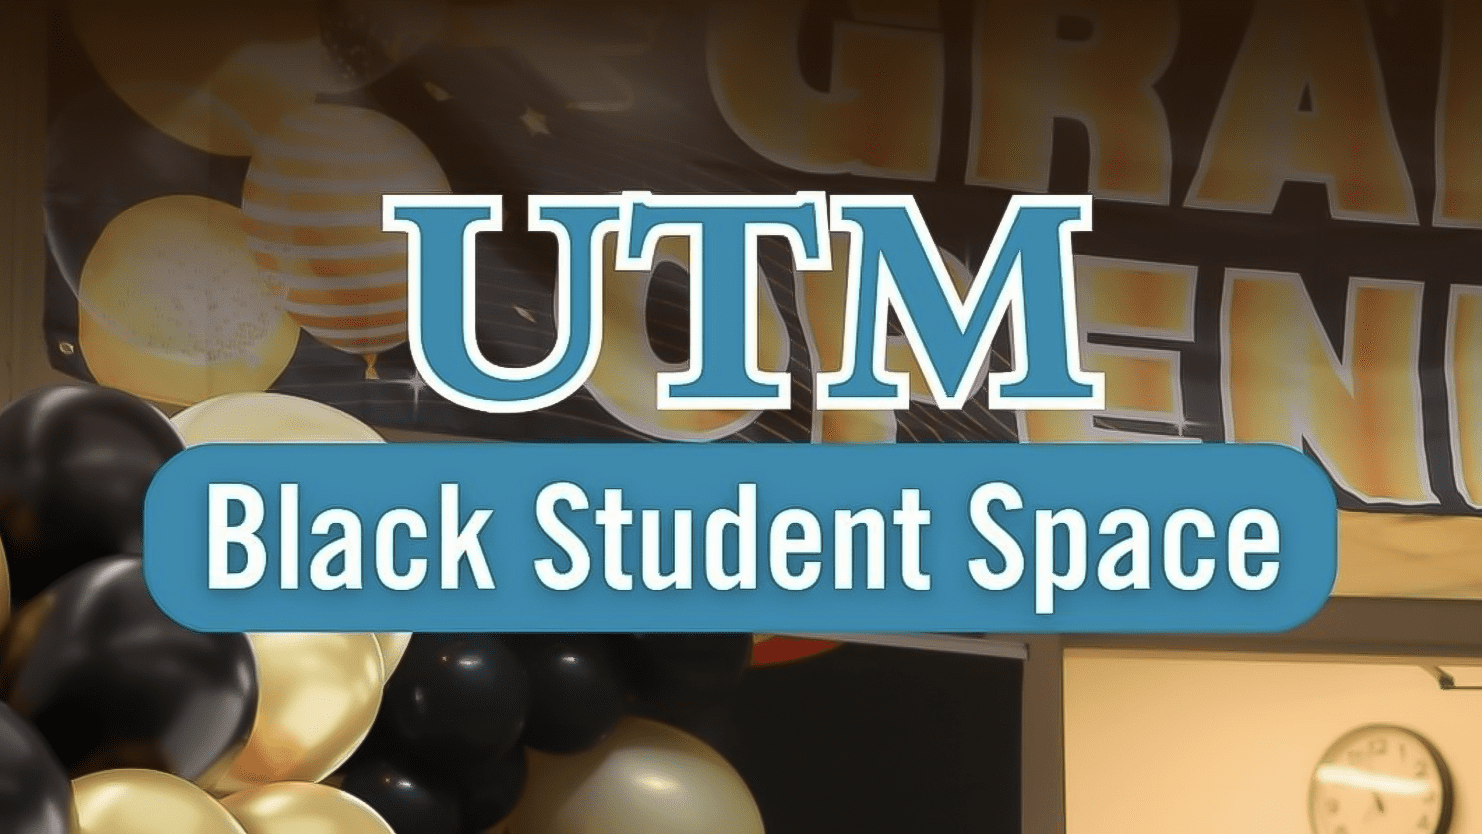 UTM Black Student Space Launch Promo Image